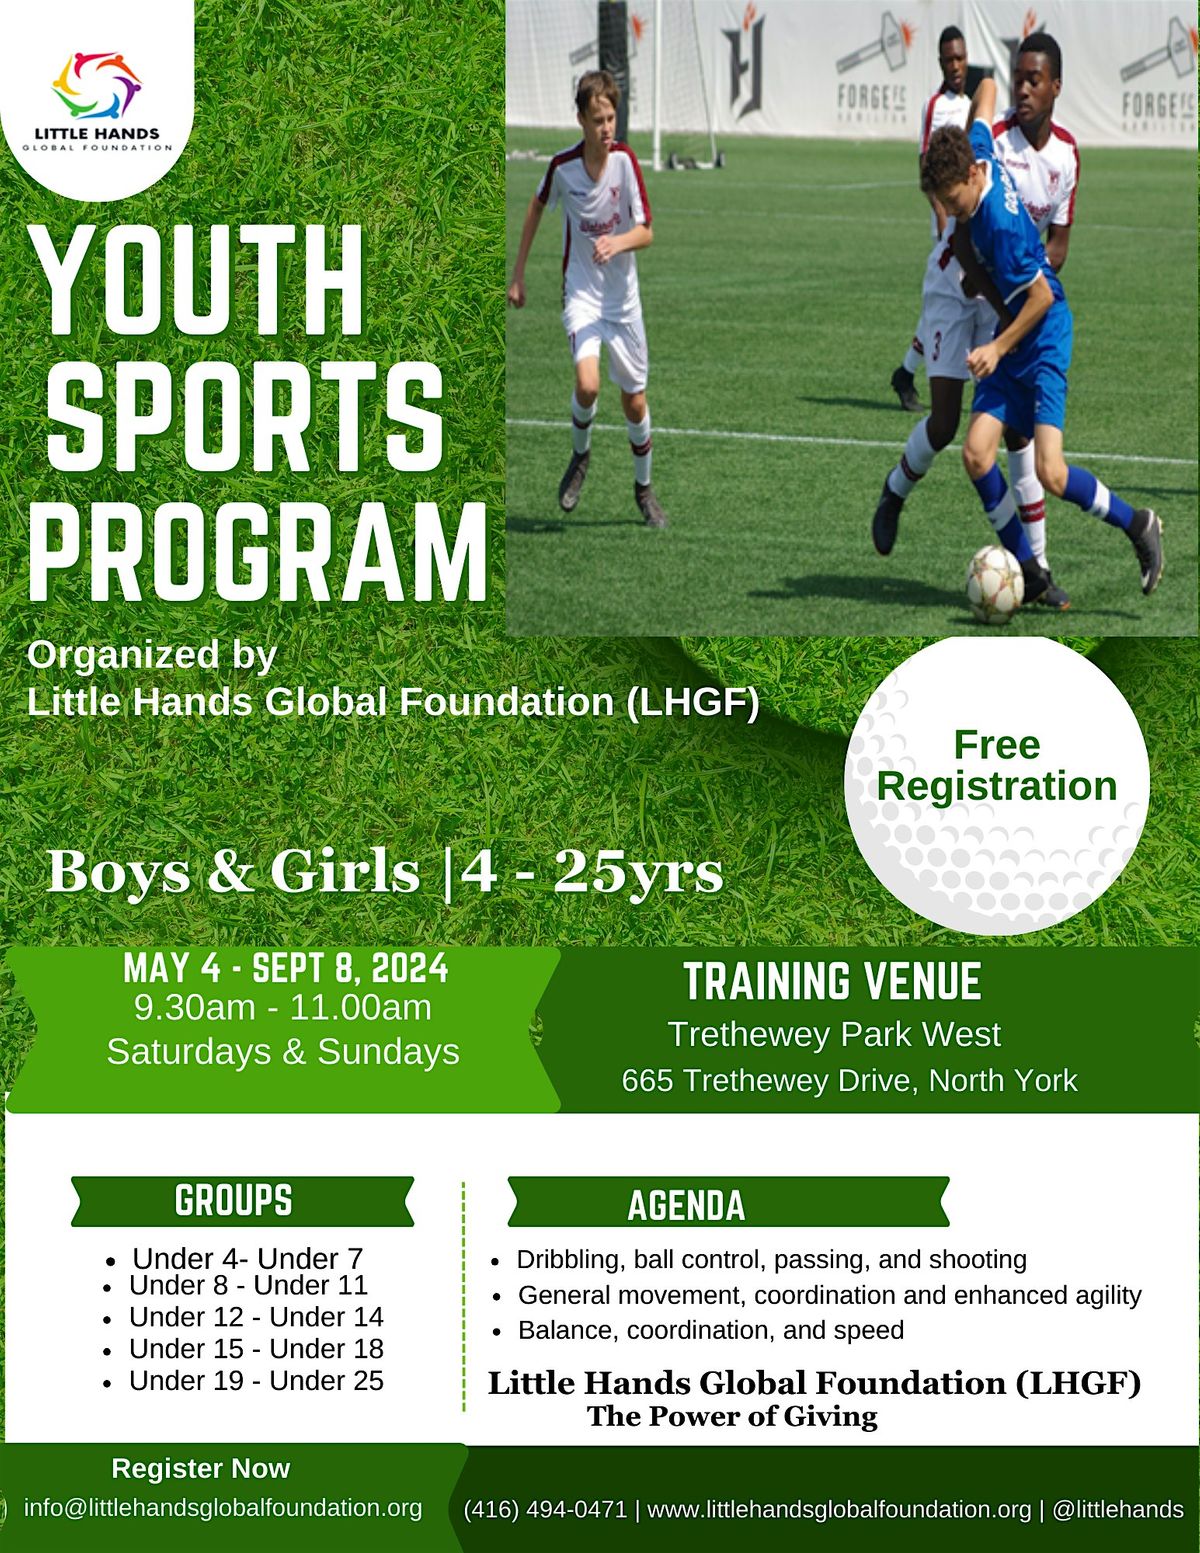 Youth Soccer Program (Boys & Girls 4yrs - 25yrs)